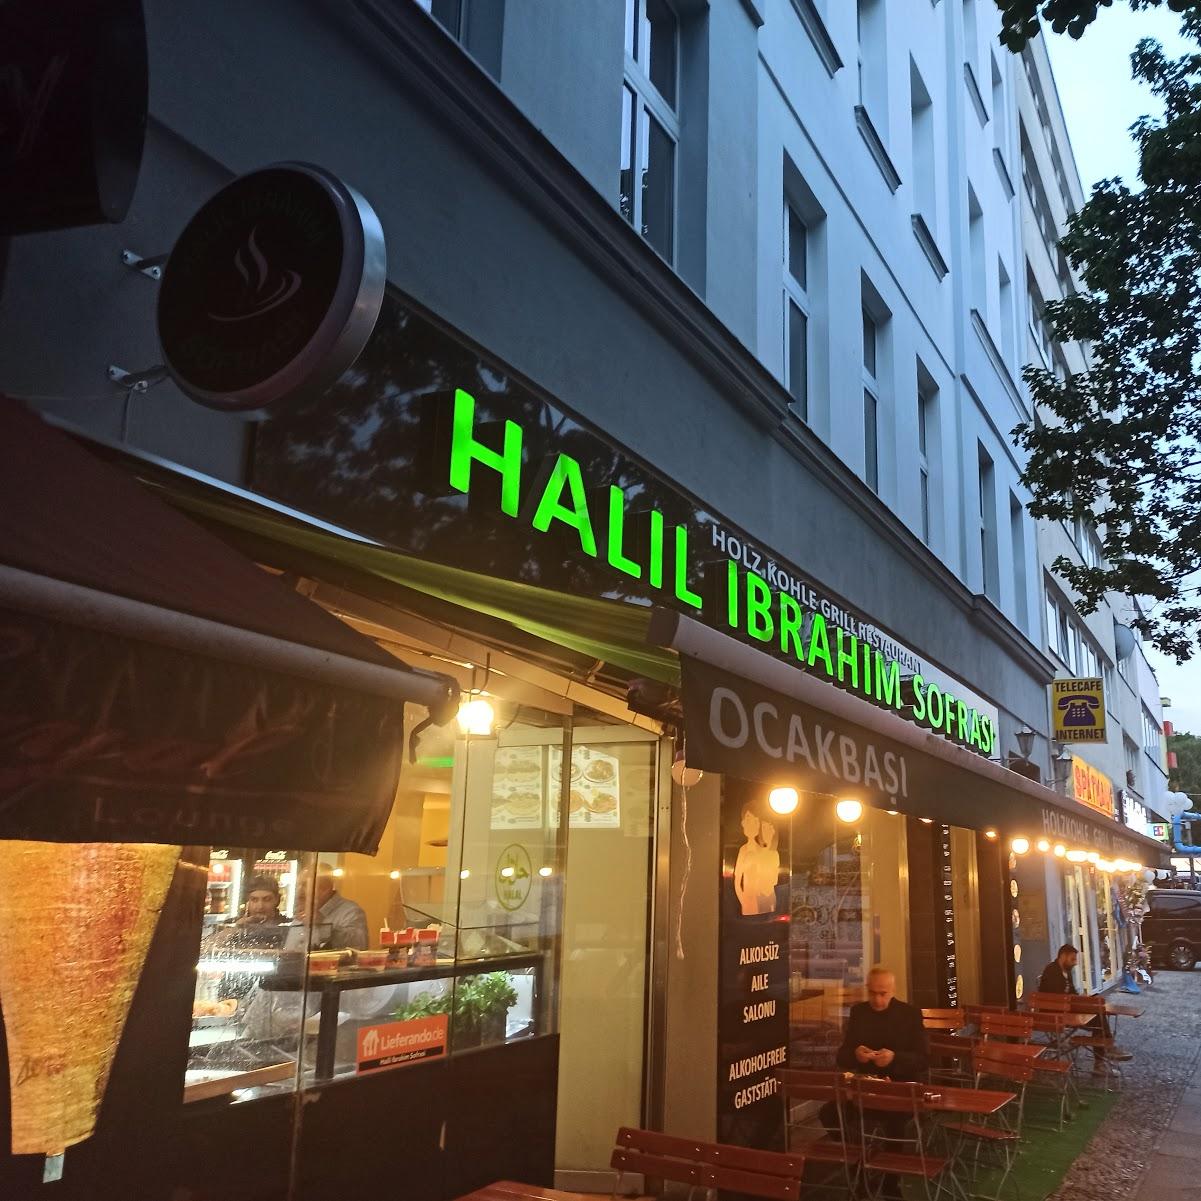 Restaurant "Halil Ibrahim Sofrasi Restaurant" in Berlin